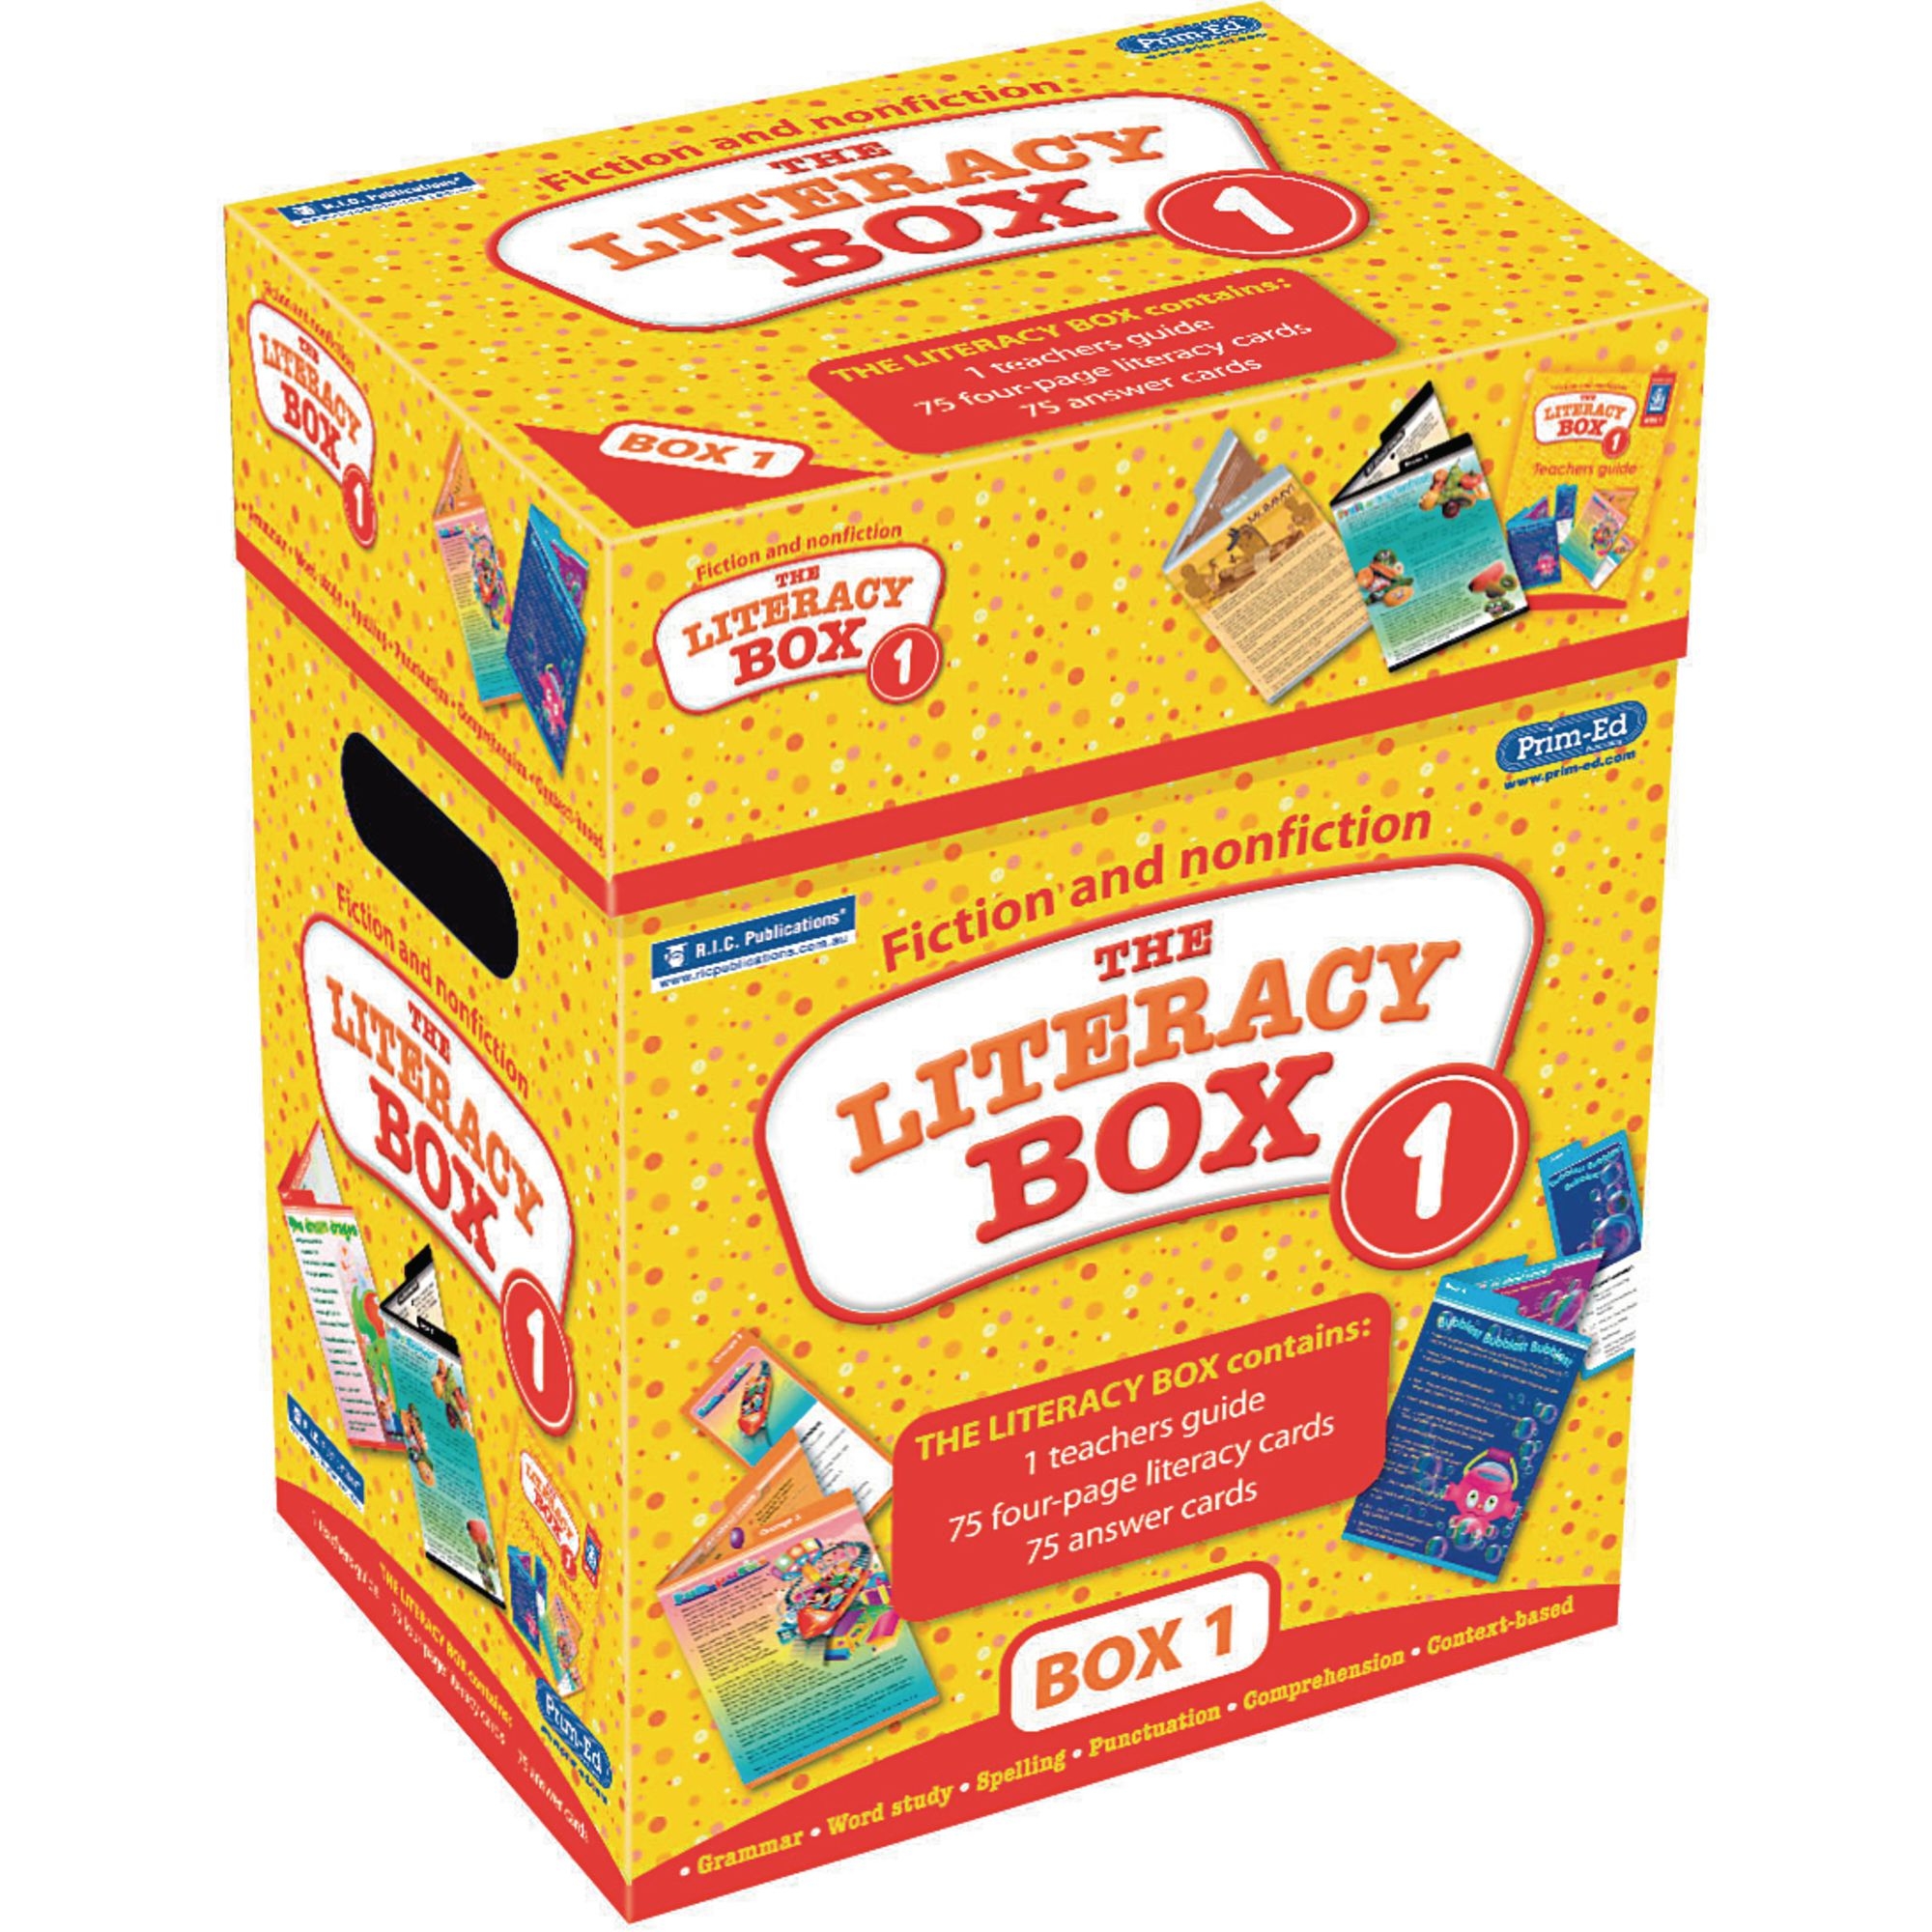 The Literacy Box Set 1